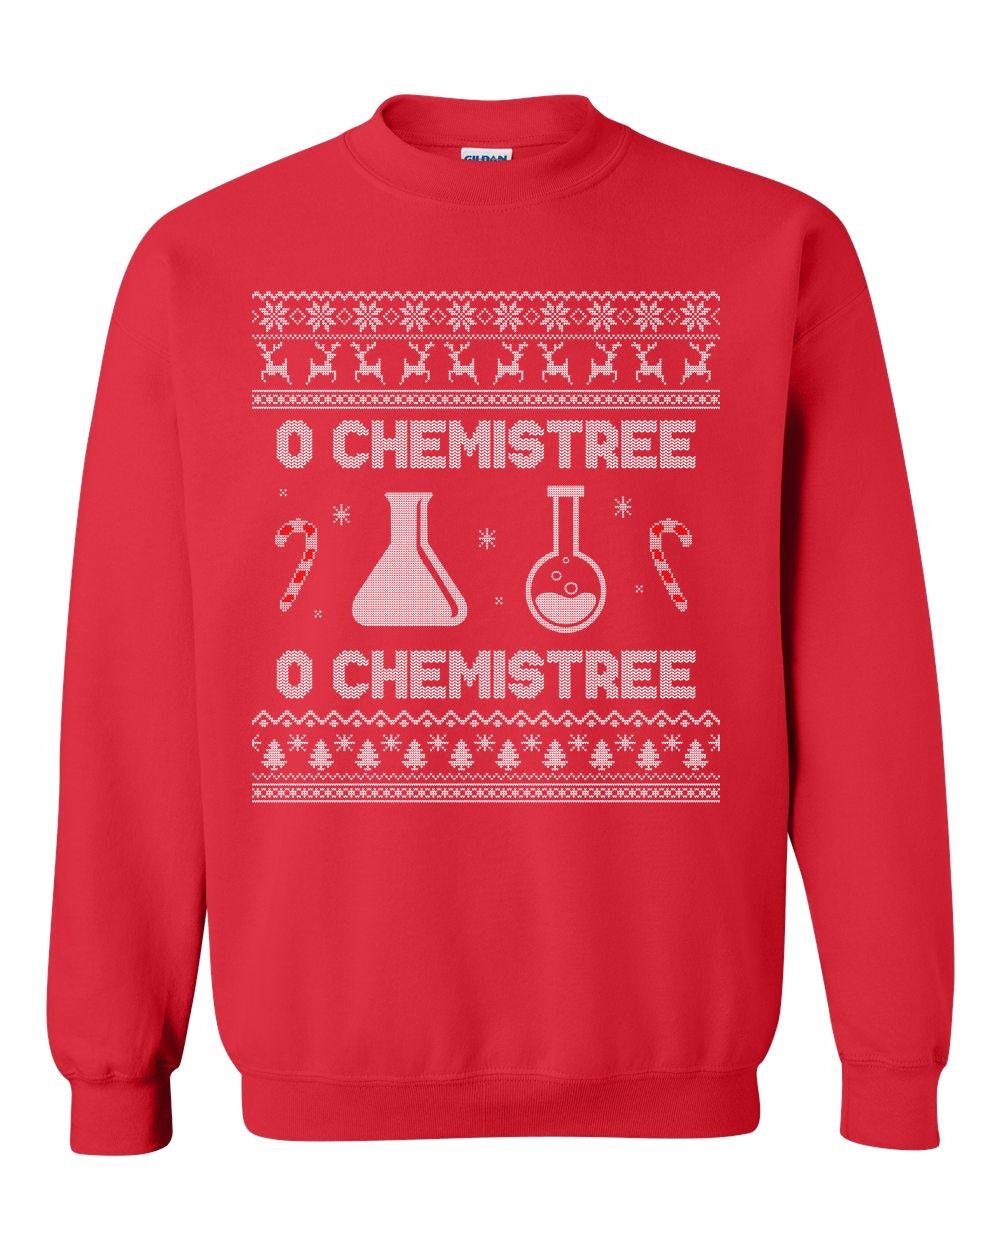 Oak tree fork build up Chemistry Ugly Christmas Sweater Ugly Christmas Sweatshirt - Etsy.de